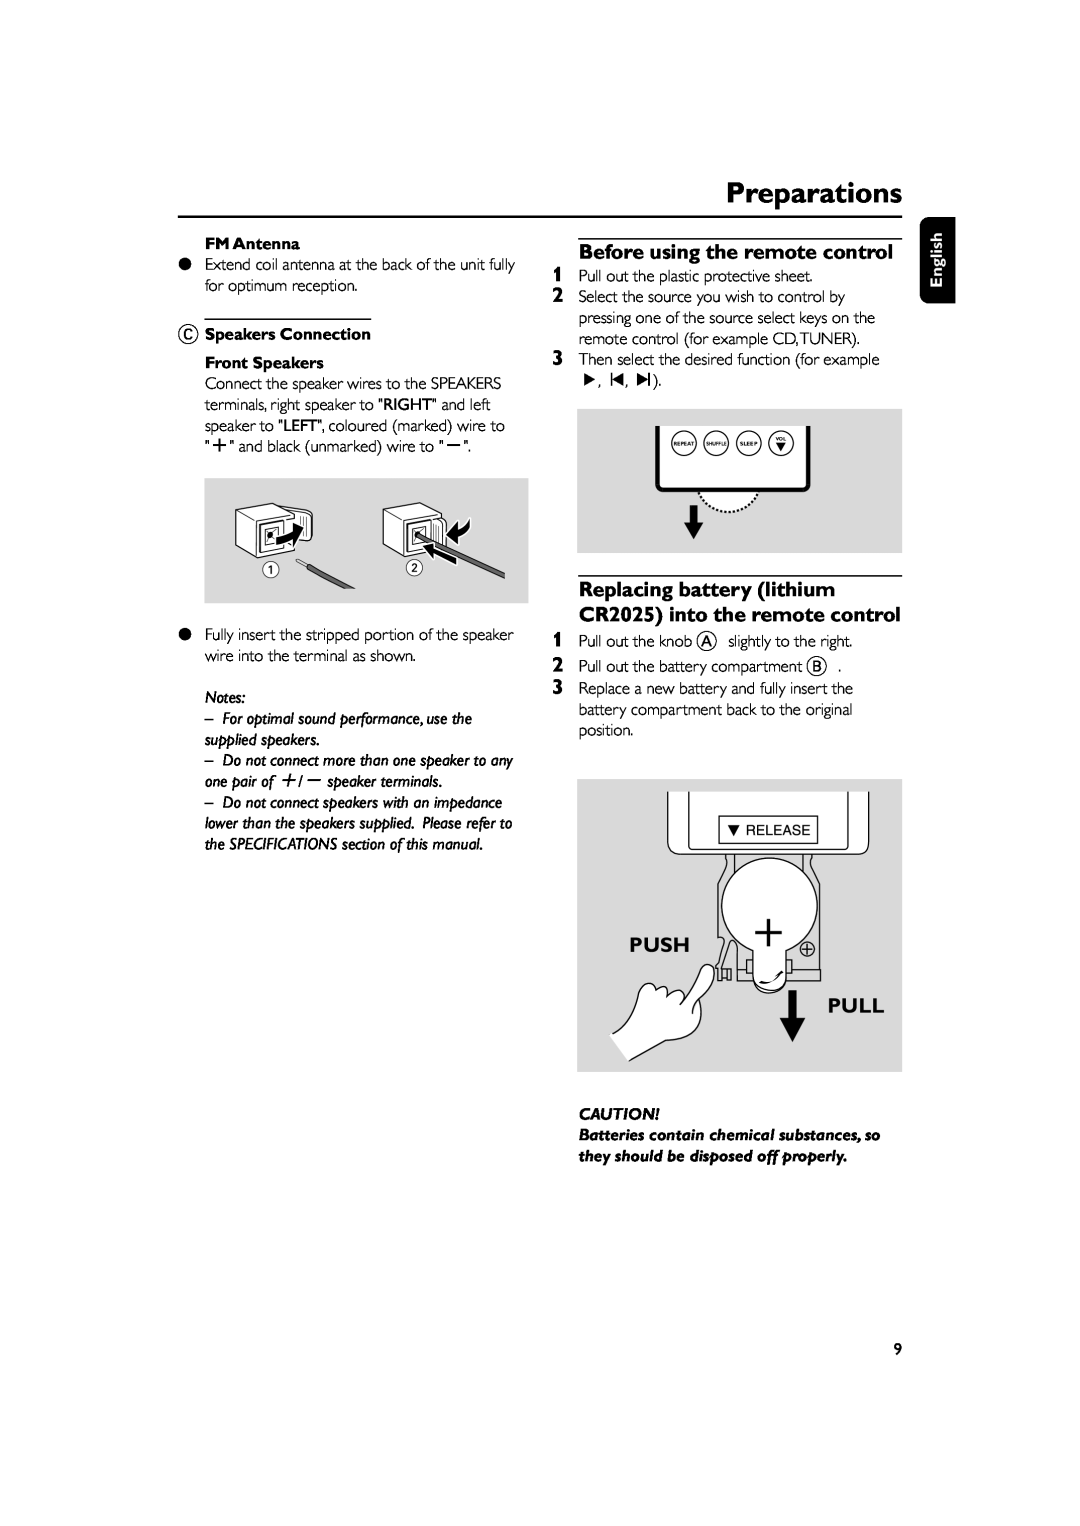 Philips MC150 manual Before using the remote control, Push Pull, Preparations, É, í, ë, English 